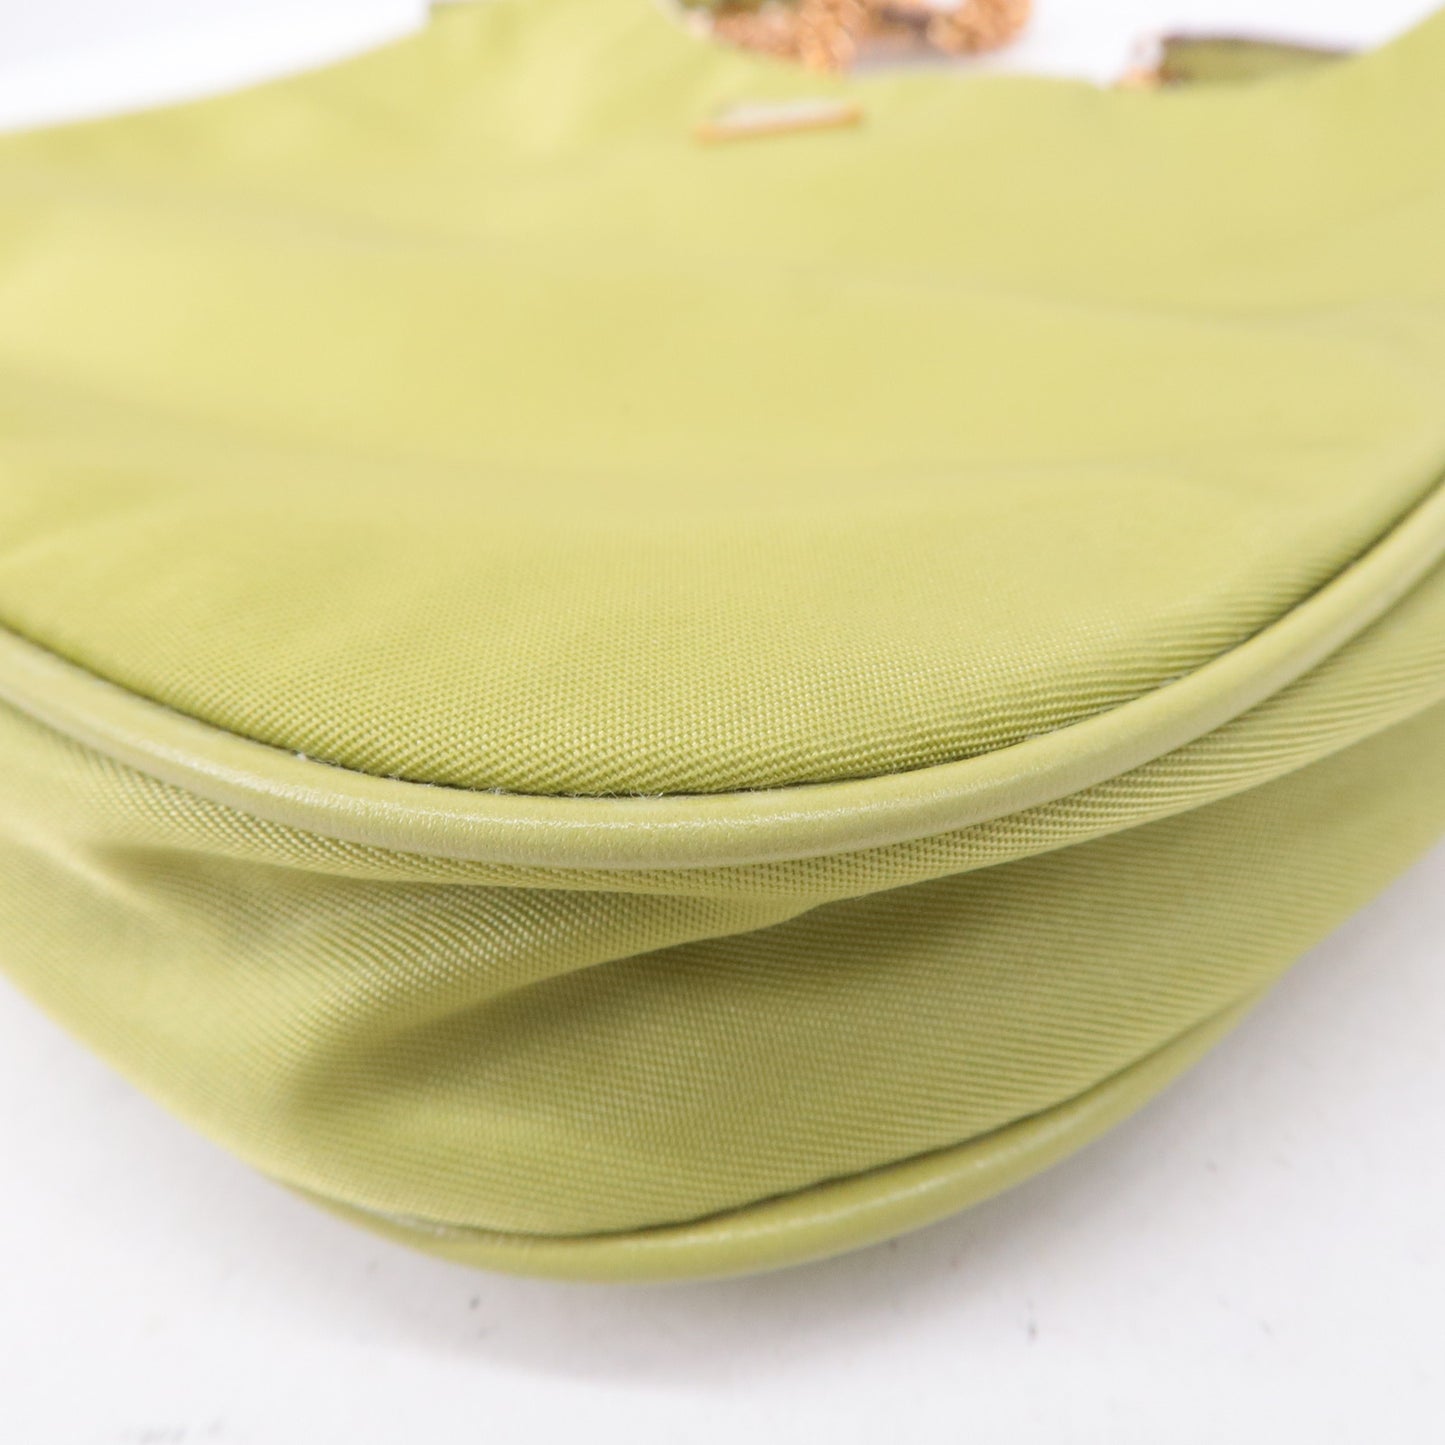 PRADA Logo Nylon Leather Chain Shoulder Bag Light Green BR0104